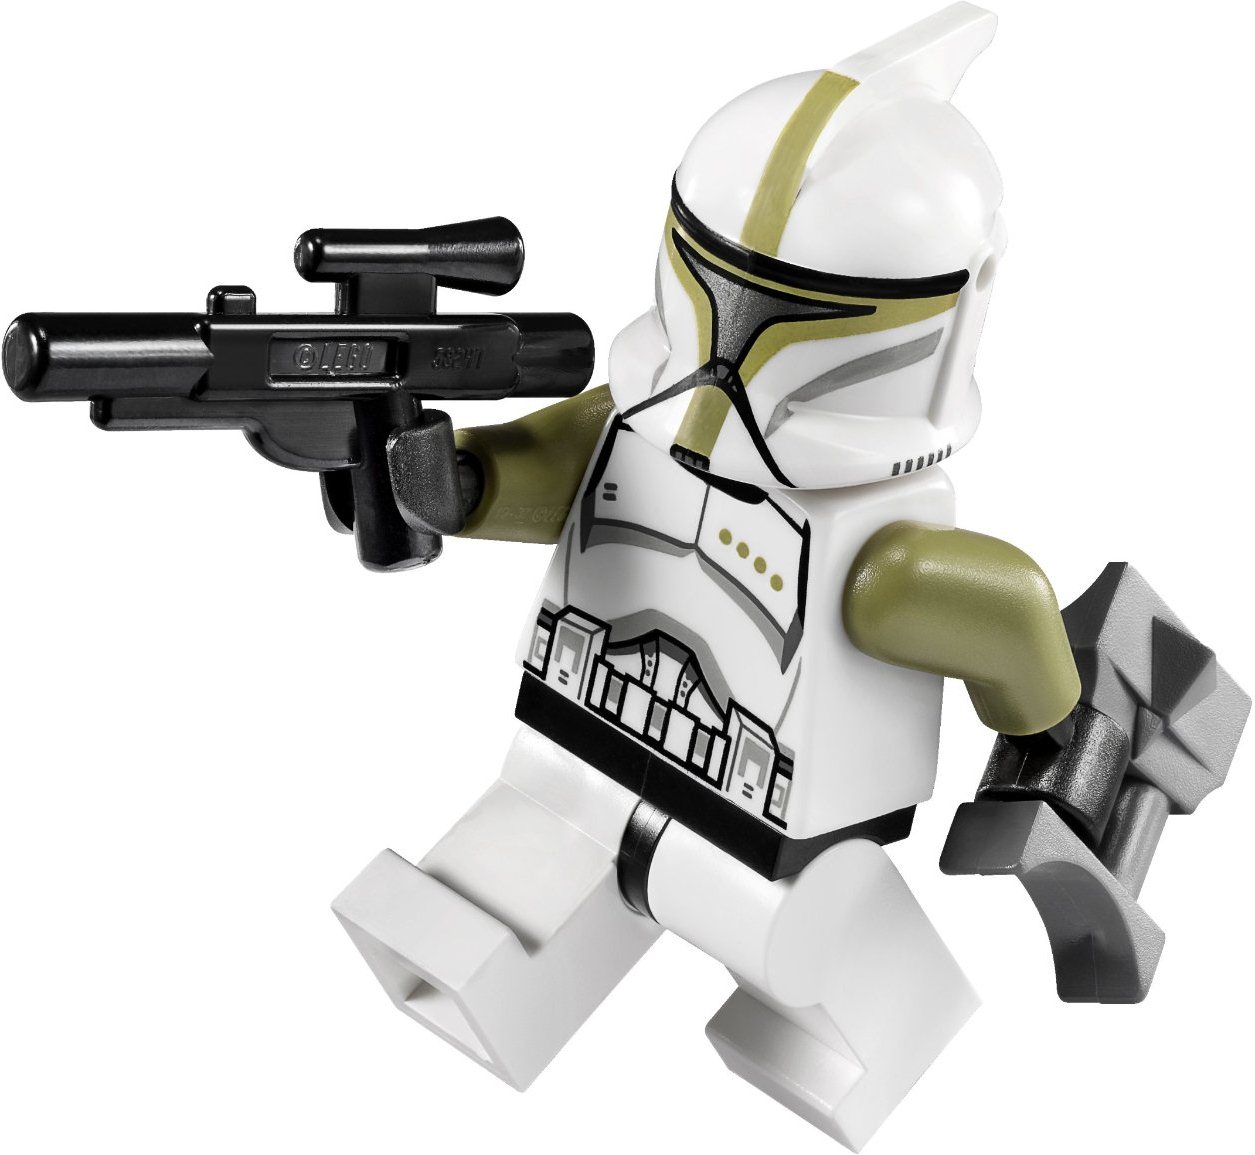 lego star wars clones